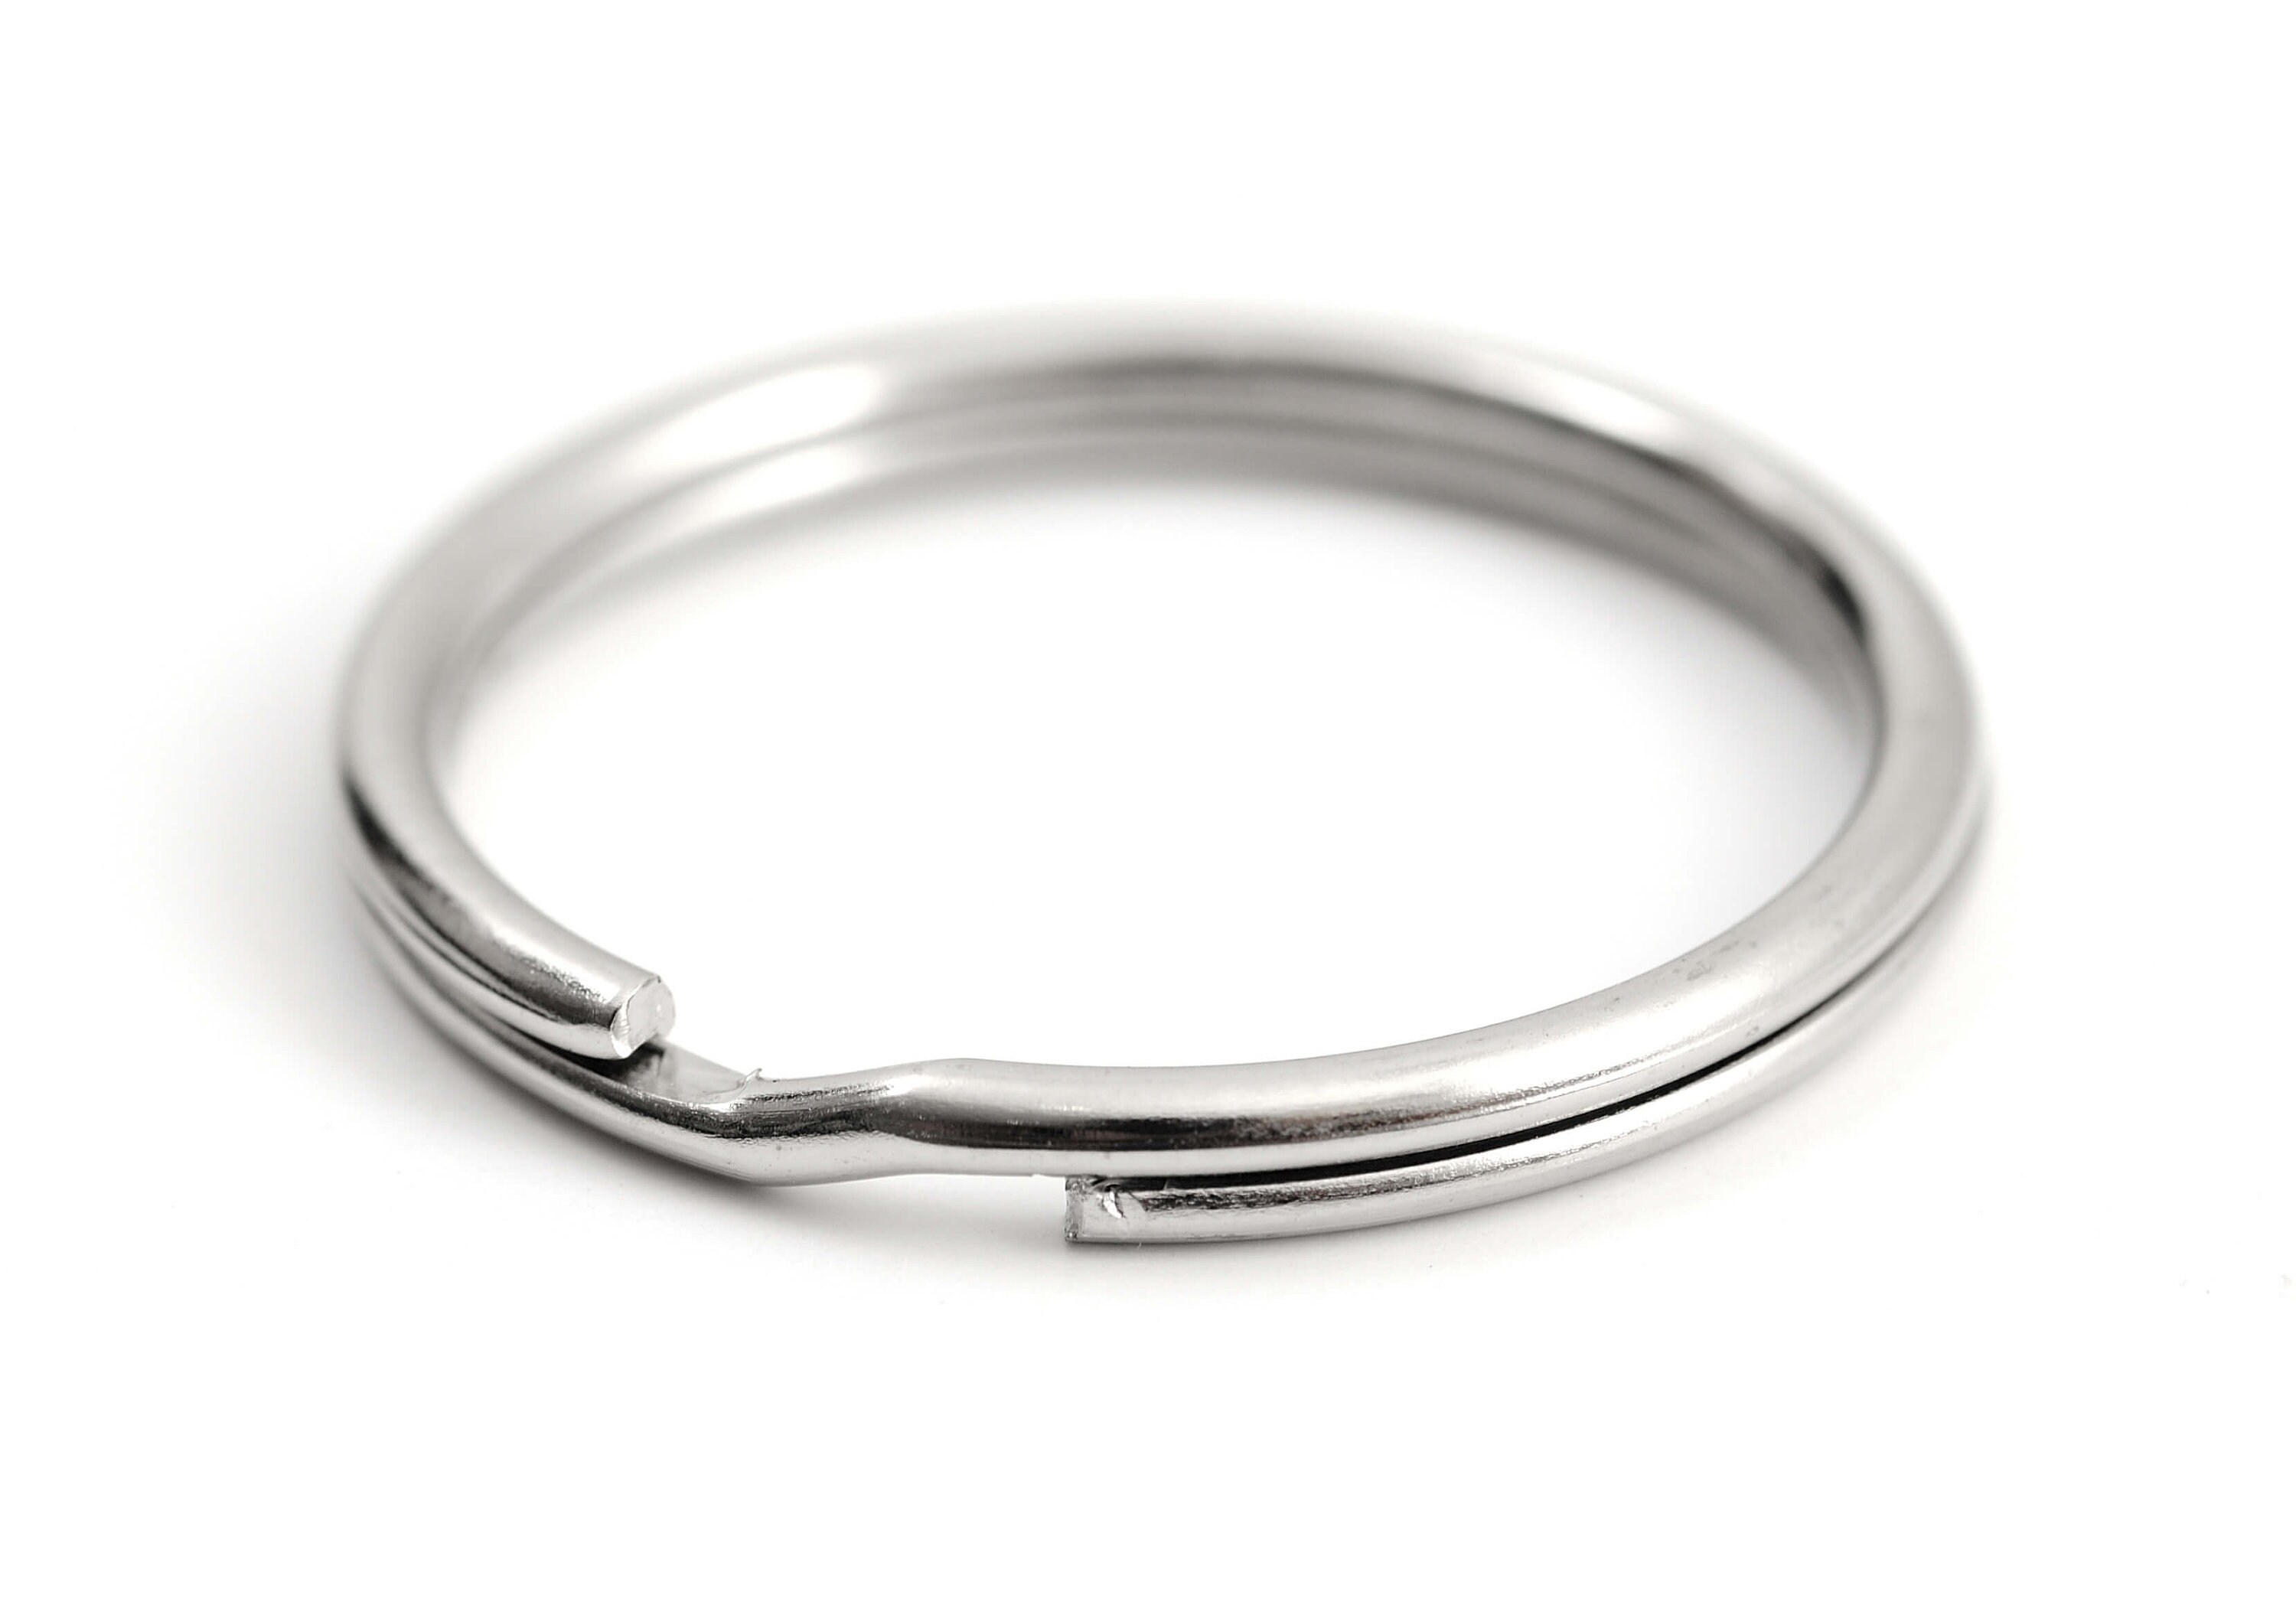 12mm nickel plated split ring/ key ring/ key chain rings, BULK 500pcs.